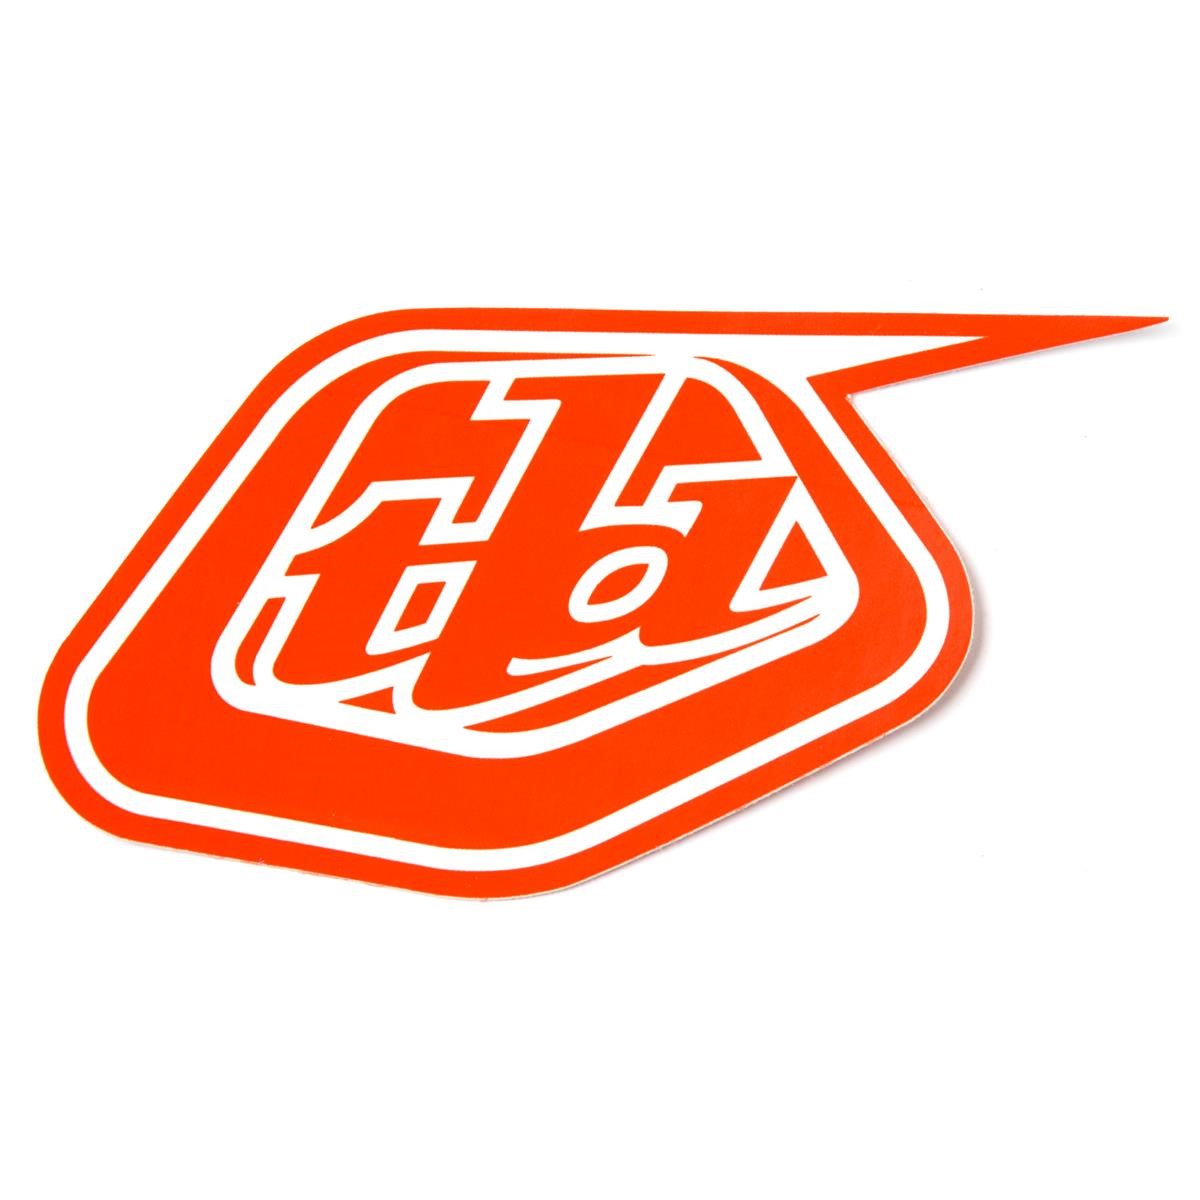 Troy Lee Designs Sticker Shield Orange - 6 inches